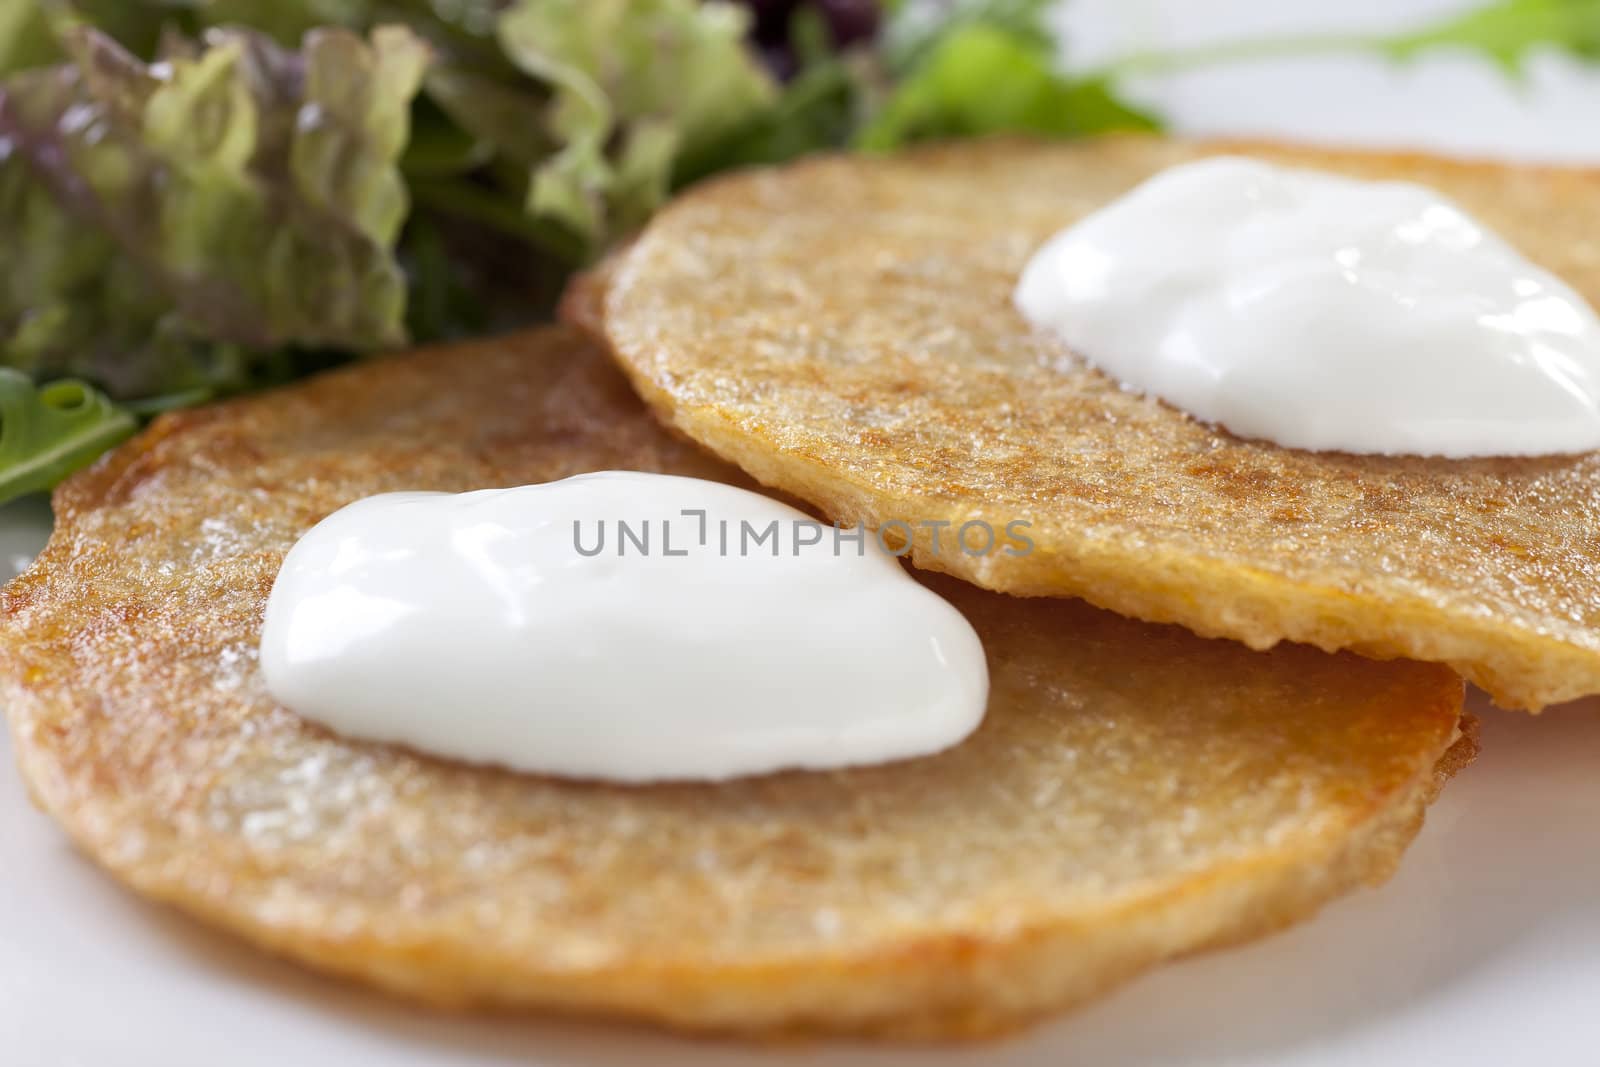 Close up of potato pancakes with sour cream